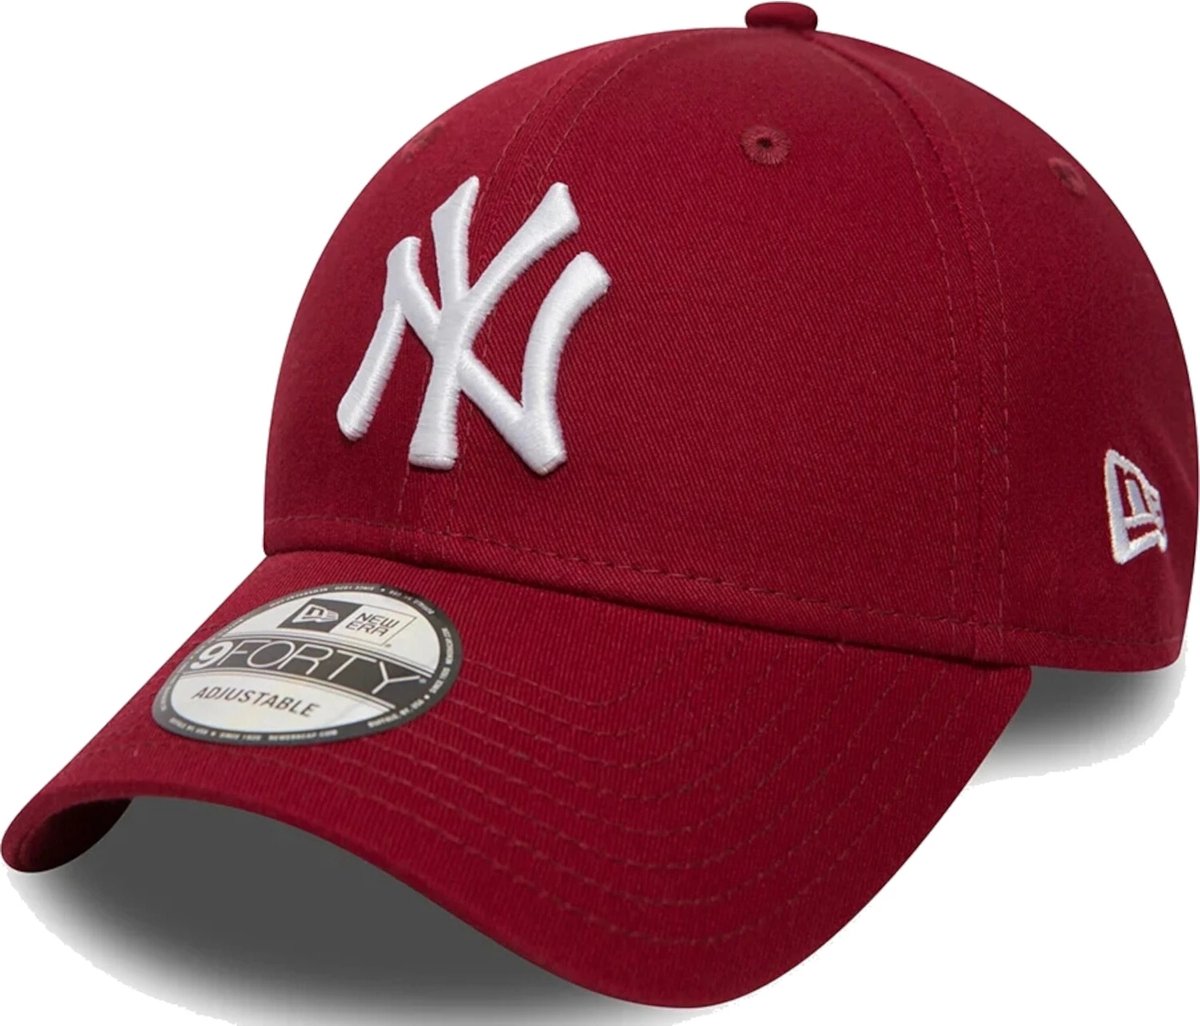 New Era LEAG ESNL 940 New York Yankees Cap - Cardinal - One size - New Era